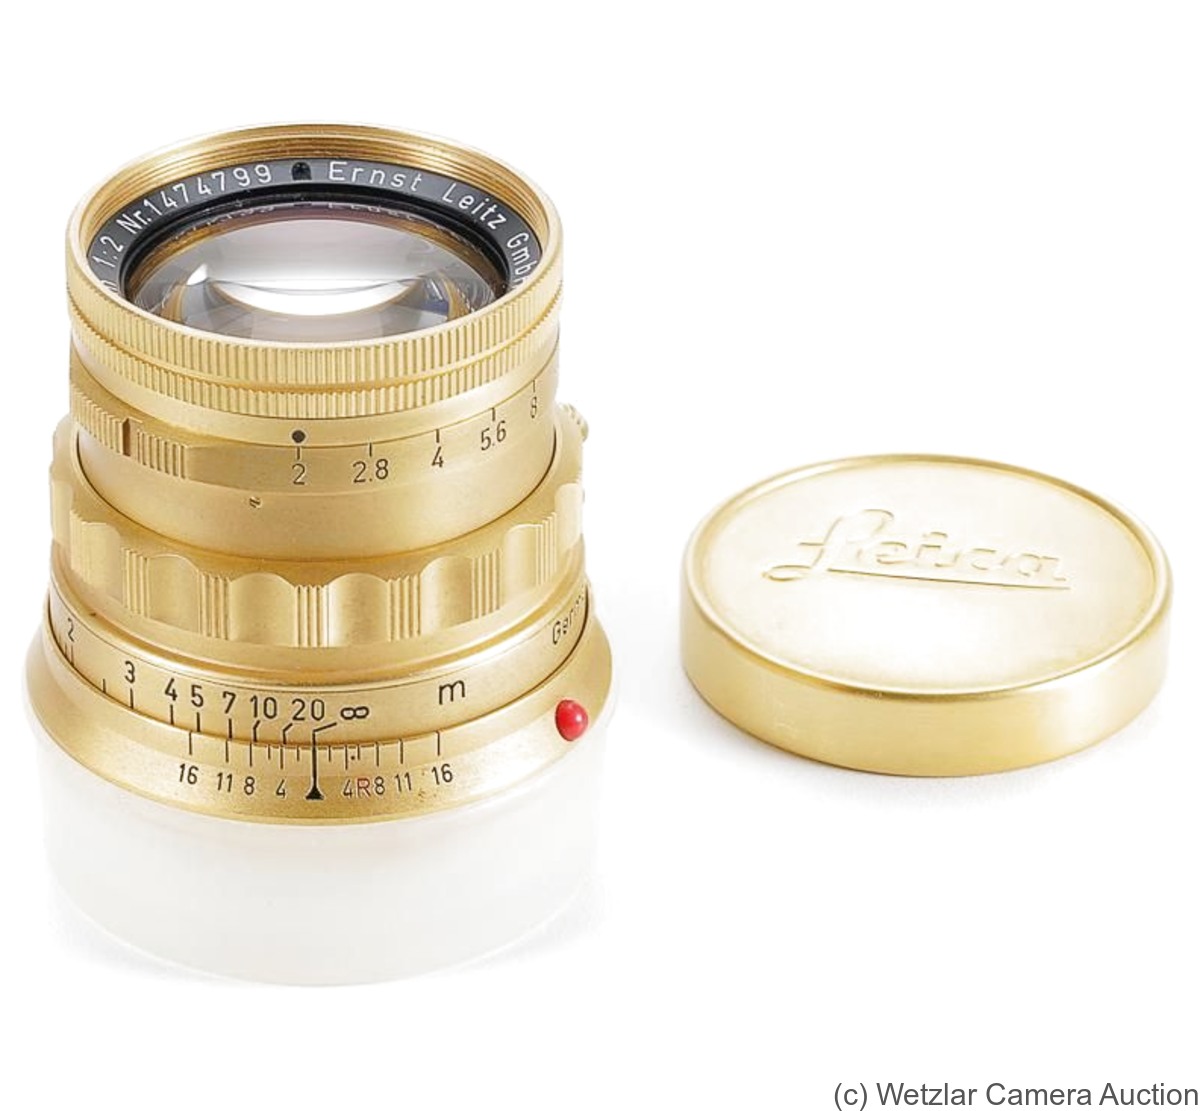 Leitz: 50mm (5cm) f2 Summicron (BM, gold) camera